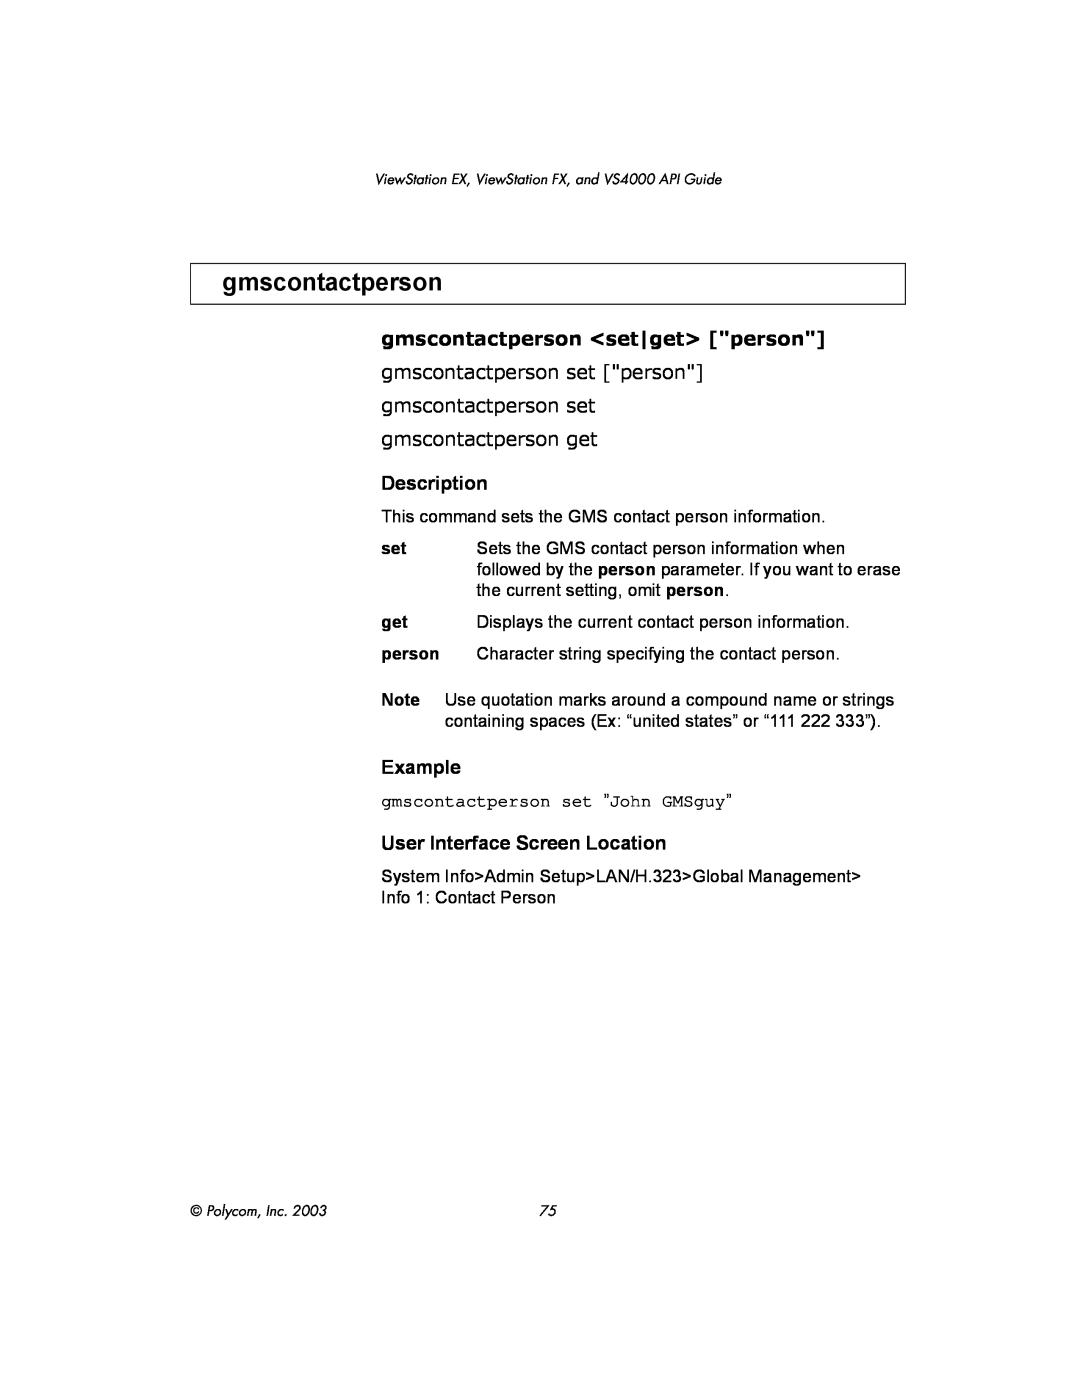 Polycom VIEWSTATION EX manual gmscontactperson <set|get> person, Description, Example, User Interface Screen Location 